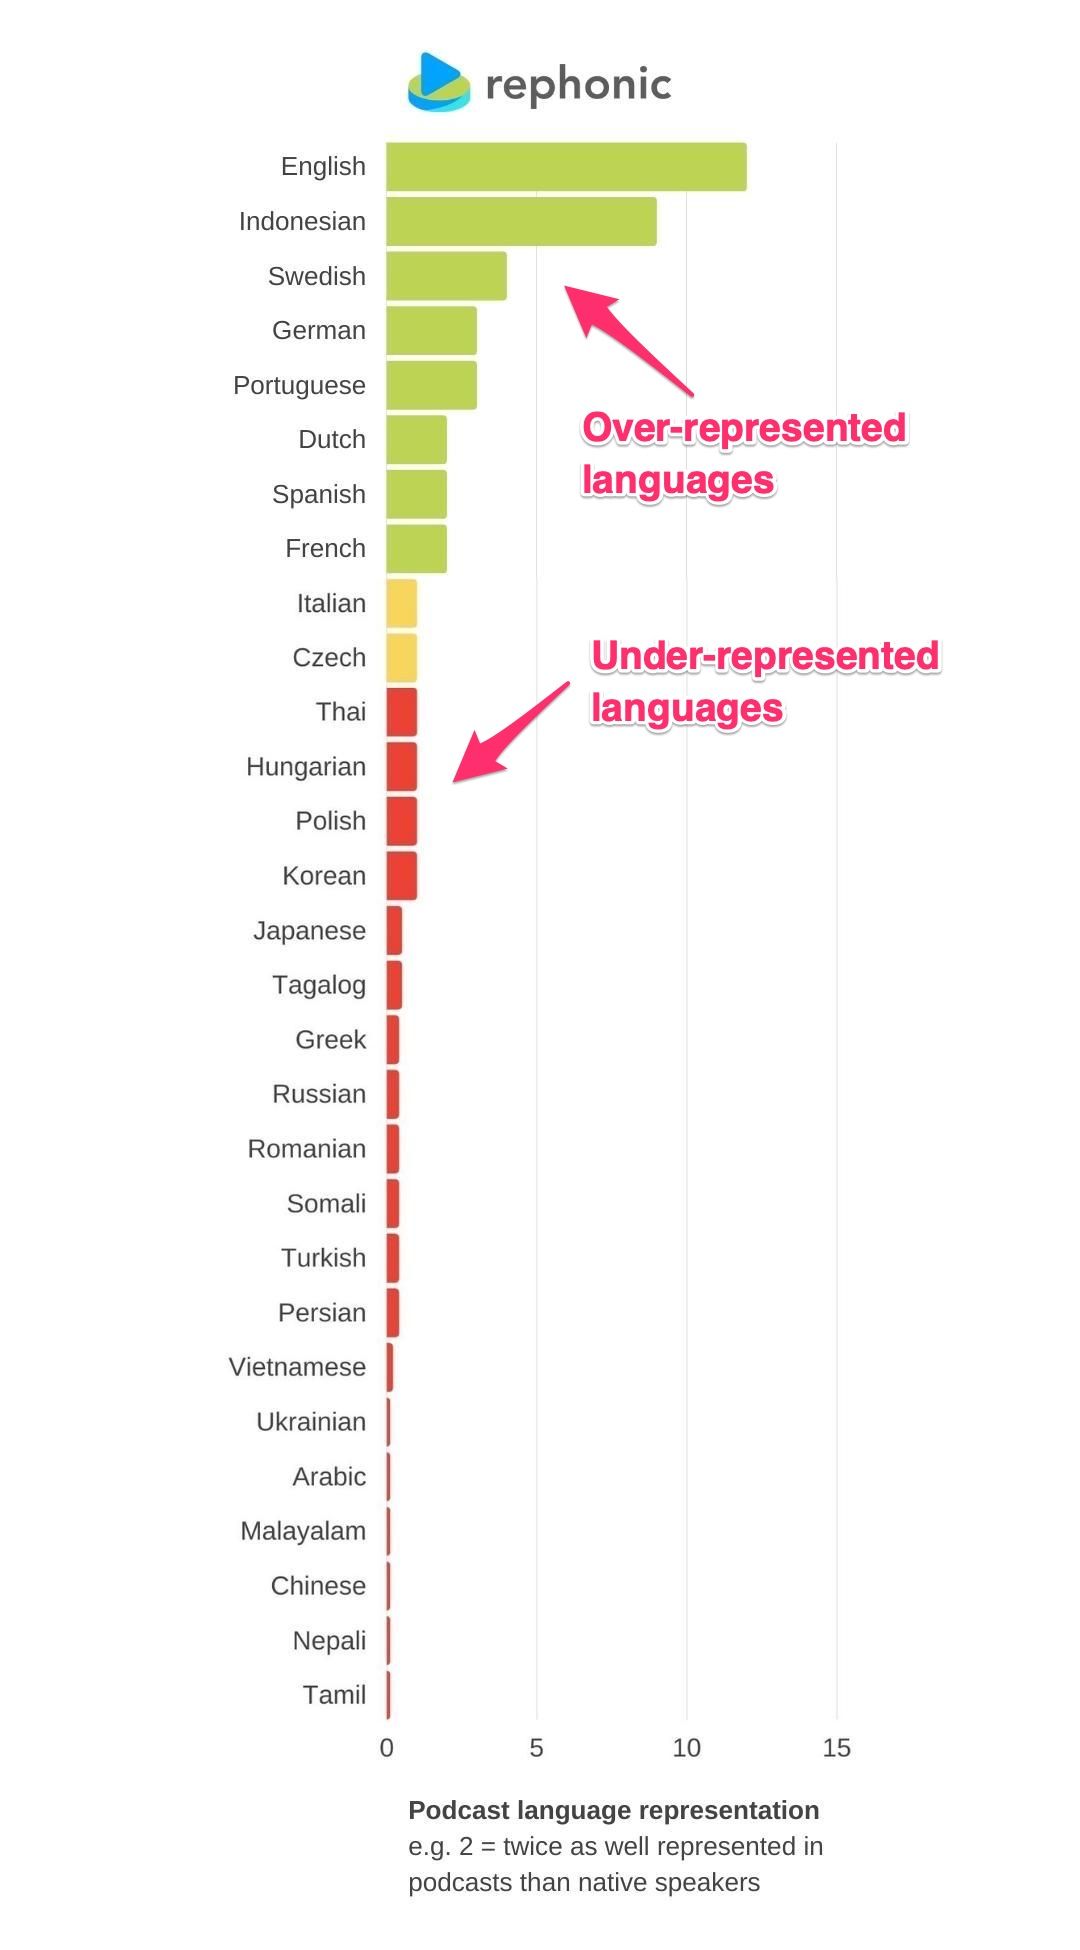 Chart showing podcast language representation